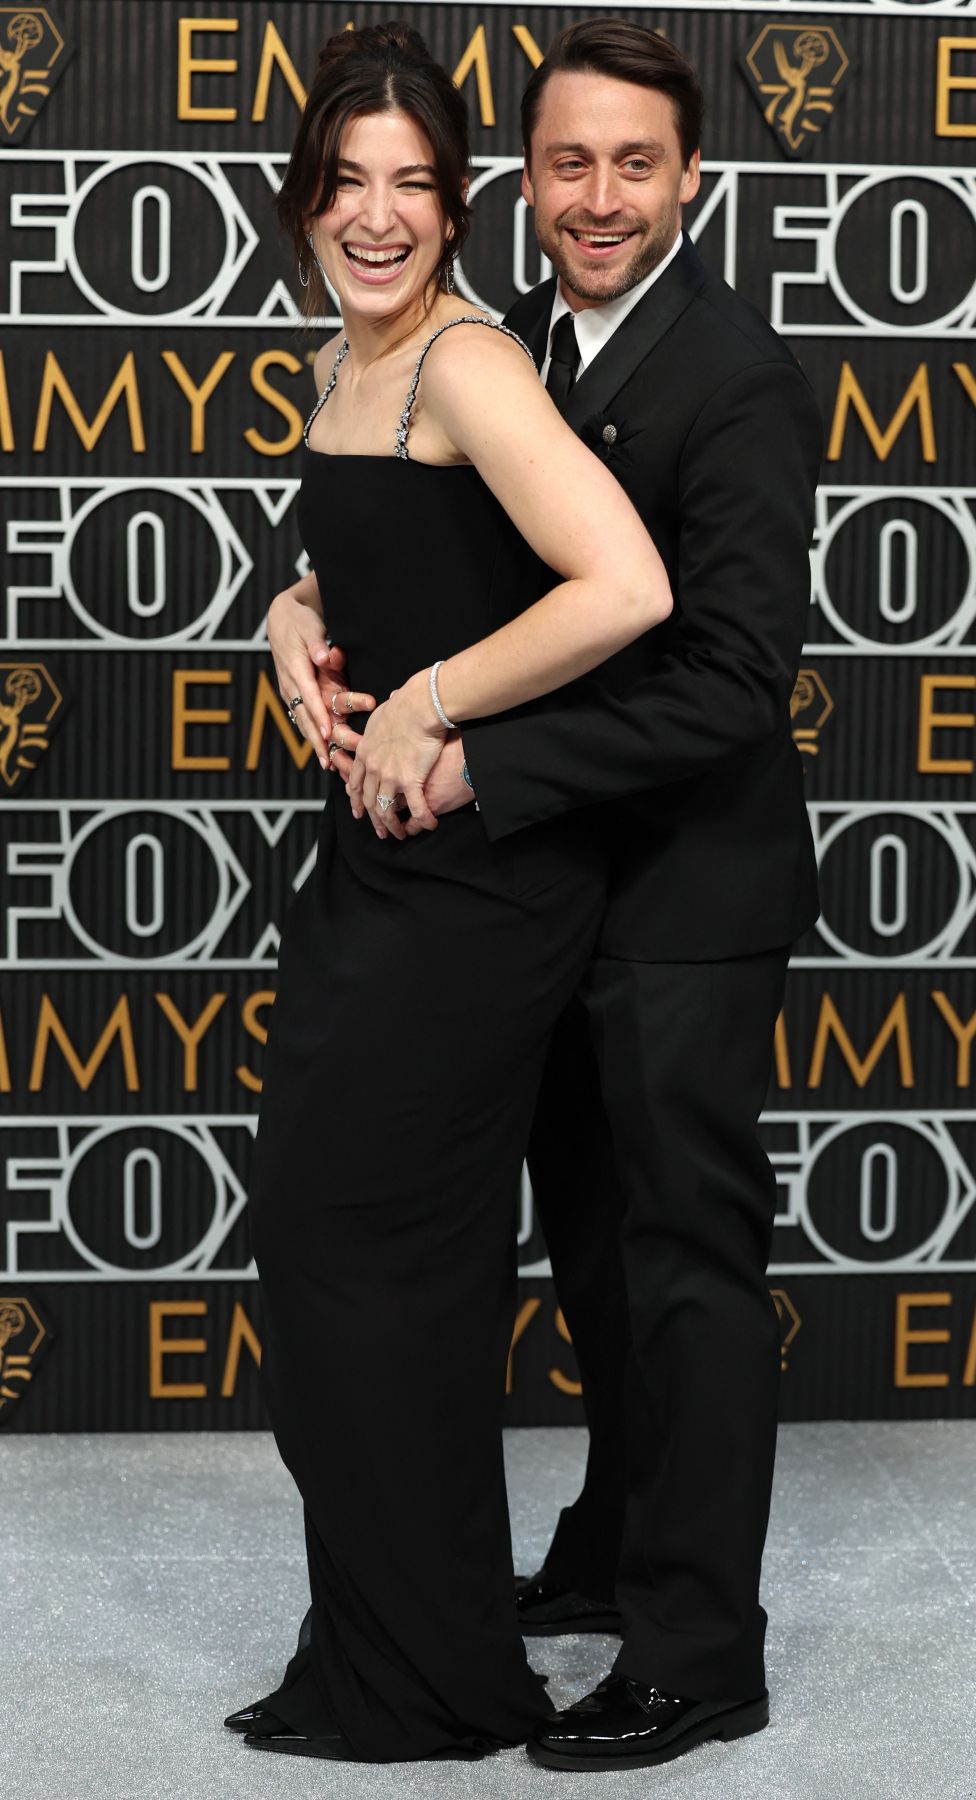 Kieran Culkin and Jazz Charton attend the 75th Primetime Emmy Awards in Los Angeles